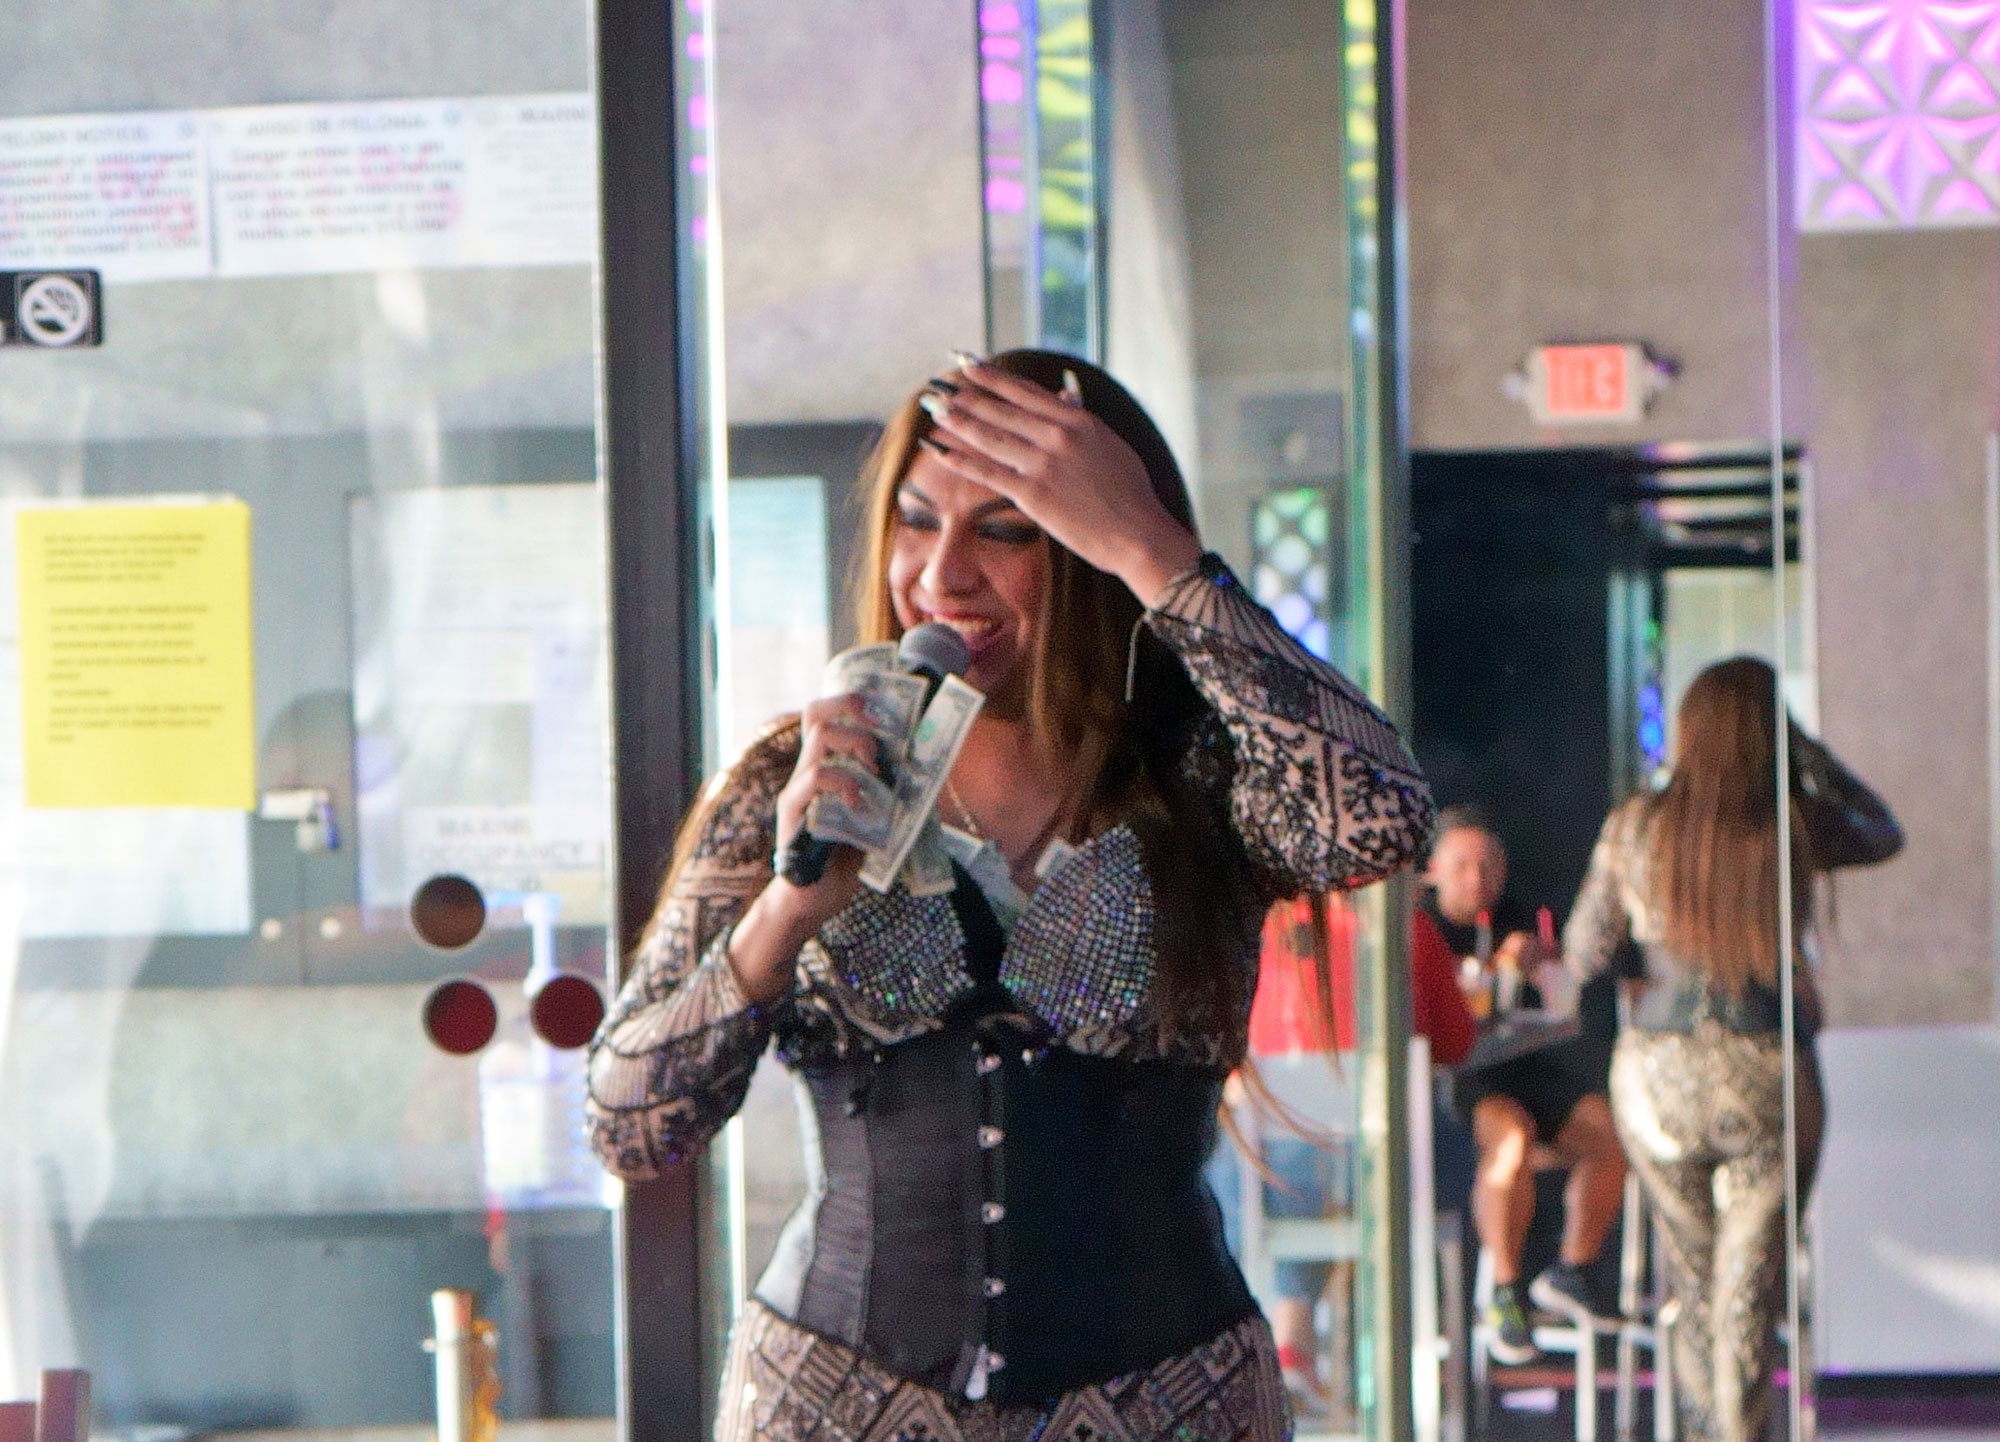 Mayra D'Lorenzo performing at Havana Lounge's Drag show in Dallas.